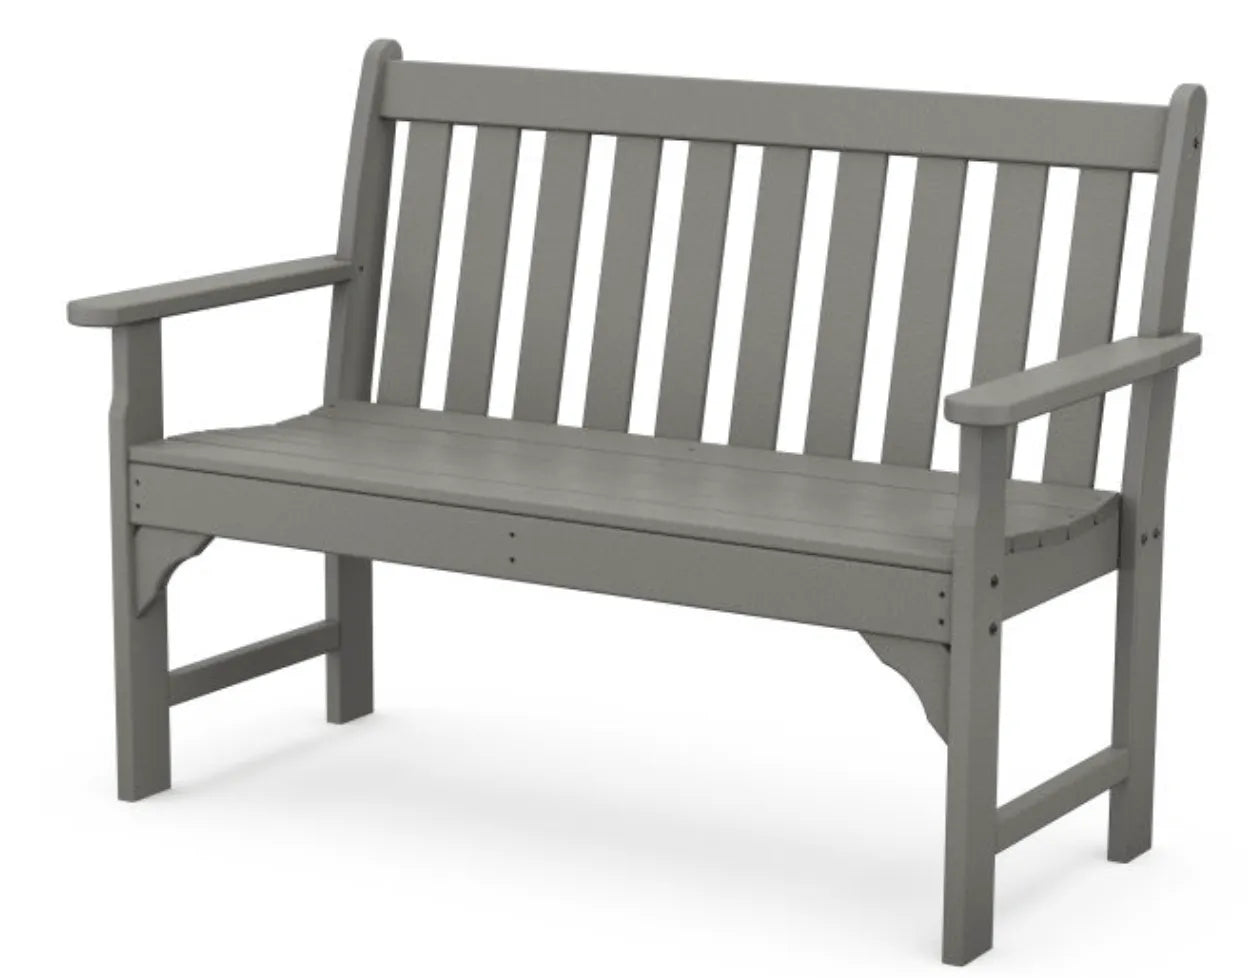 Polywood polywood bench Slate Grey POLYWOOD® Vineyard 48" Bench